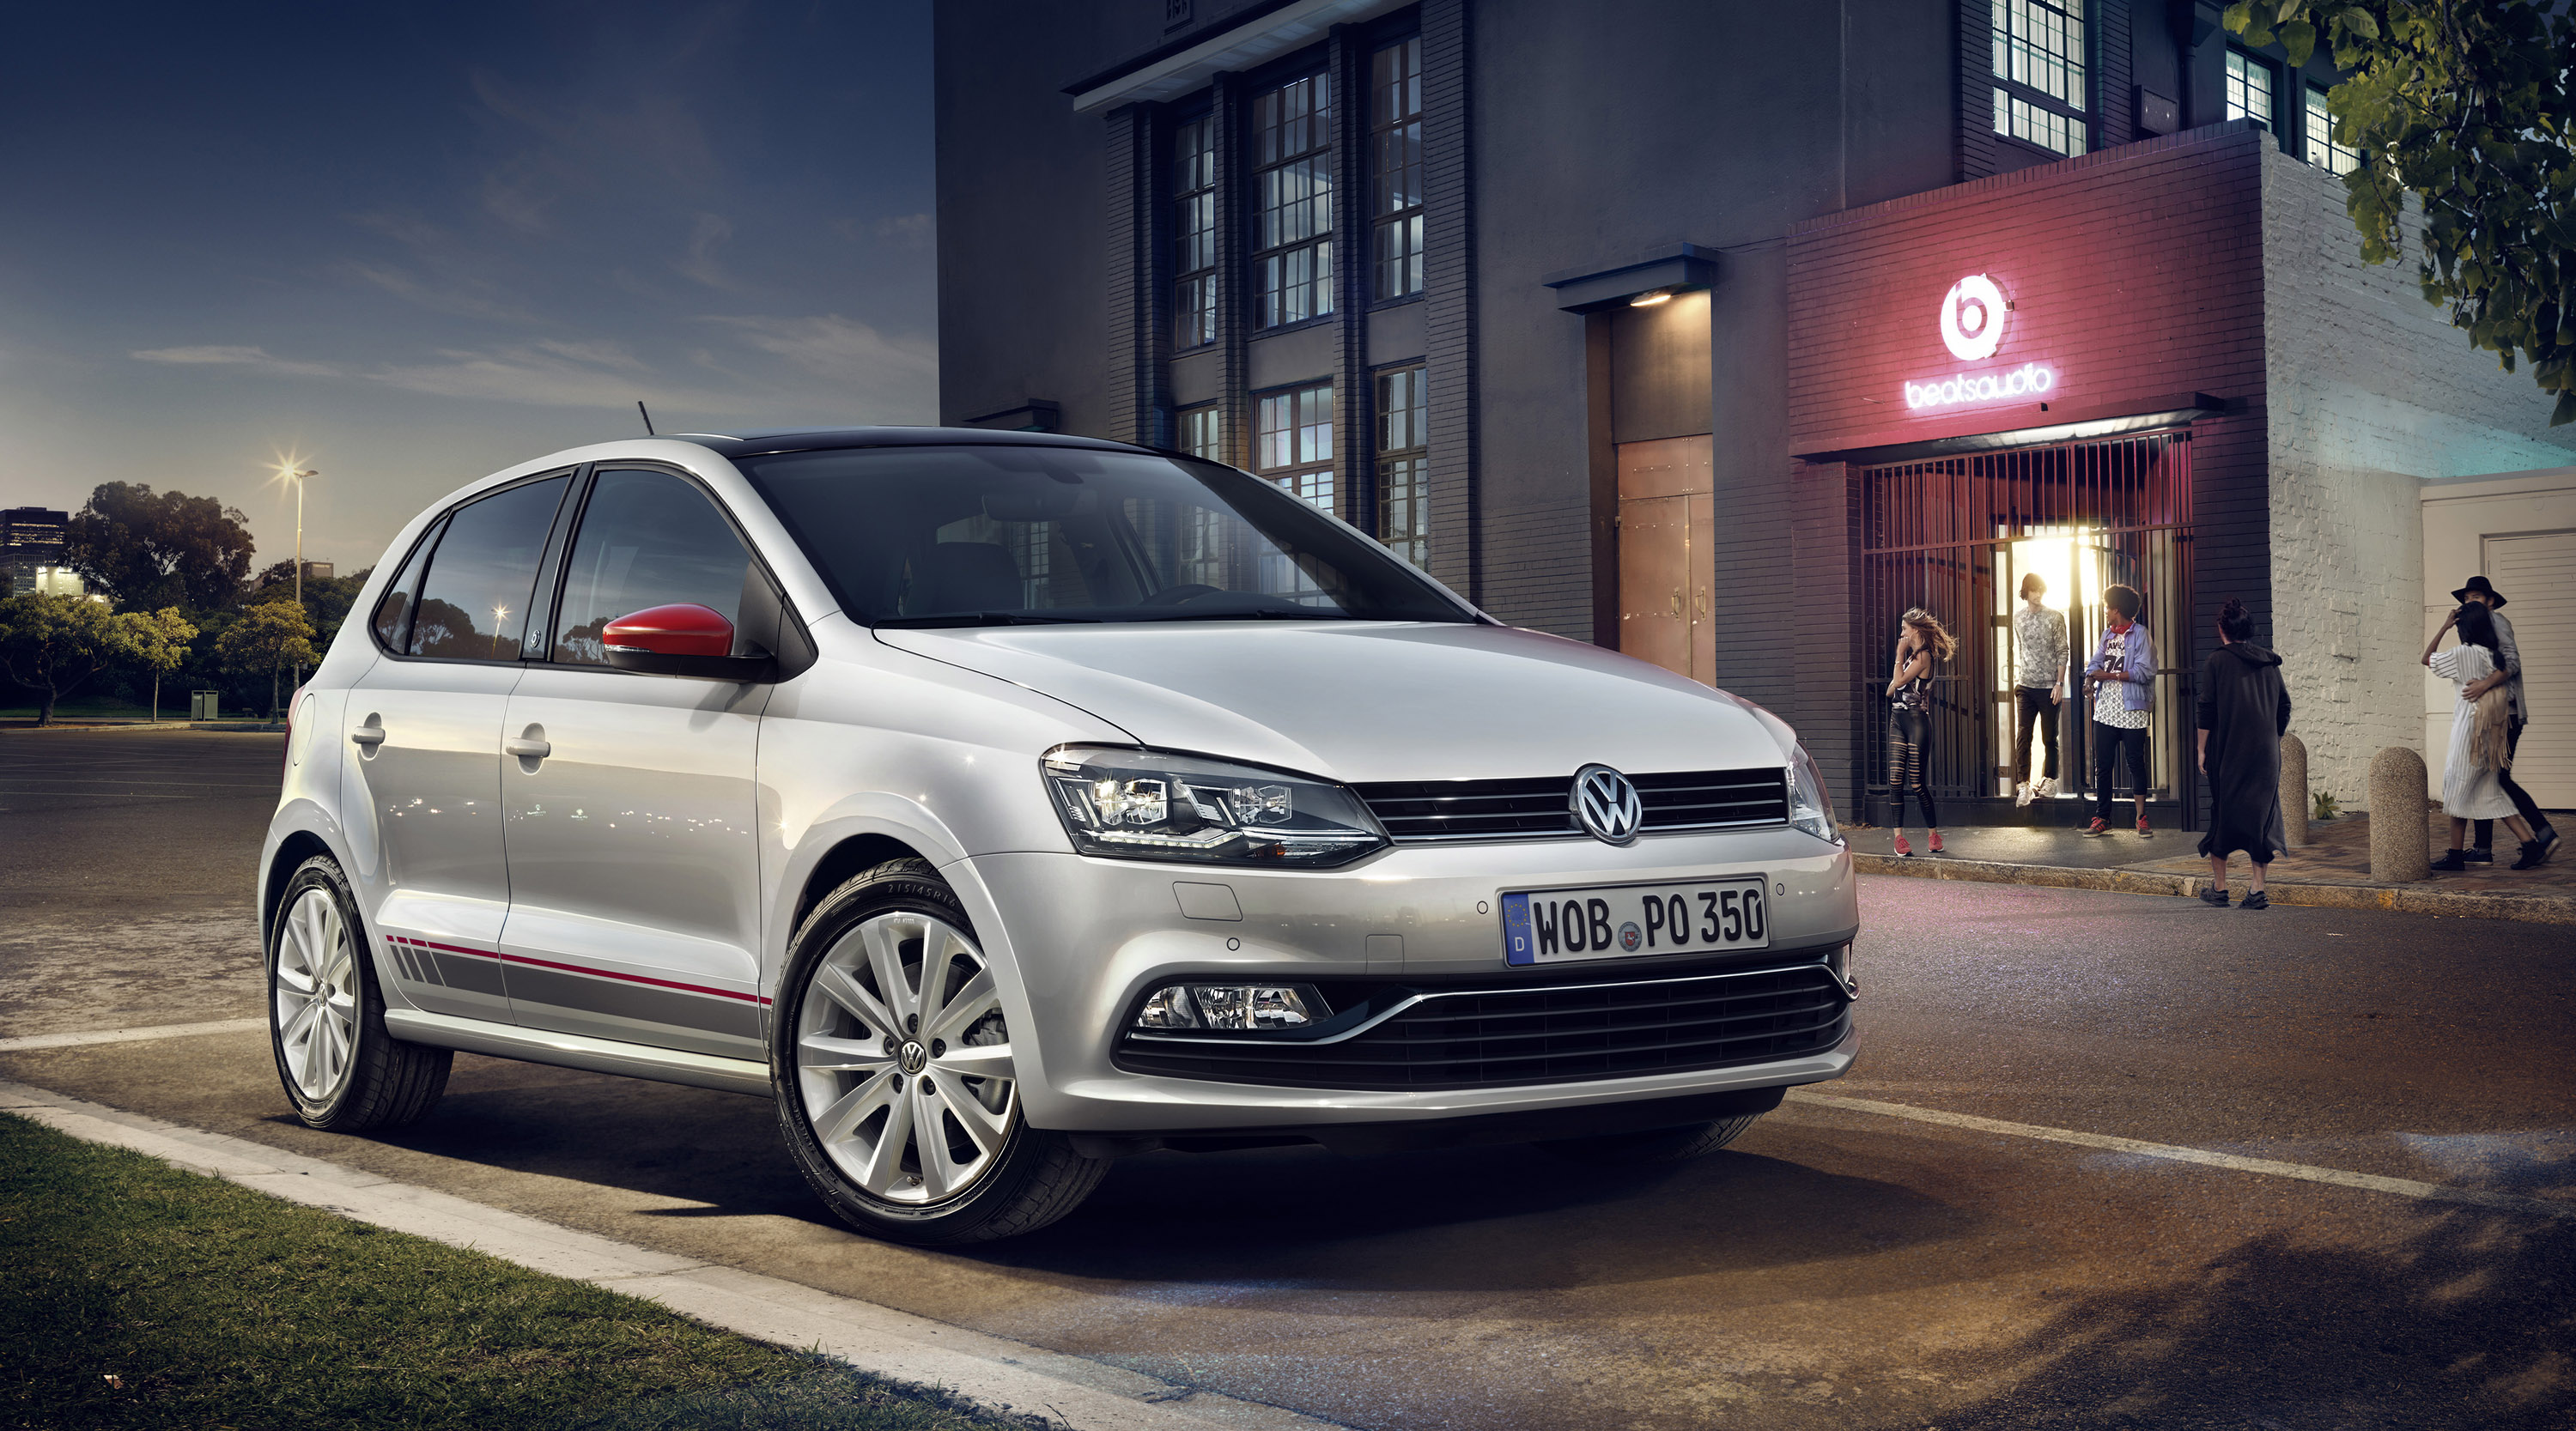 Volkswagen Polo Beats Special Edition